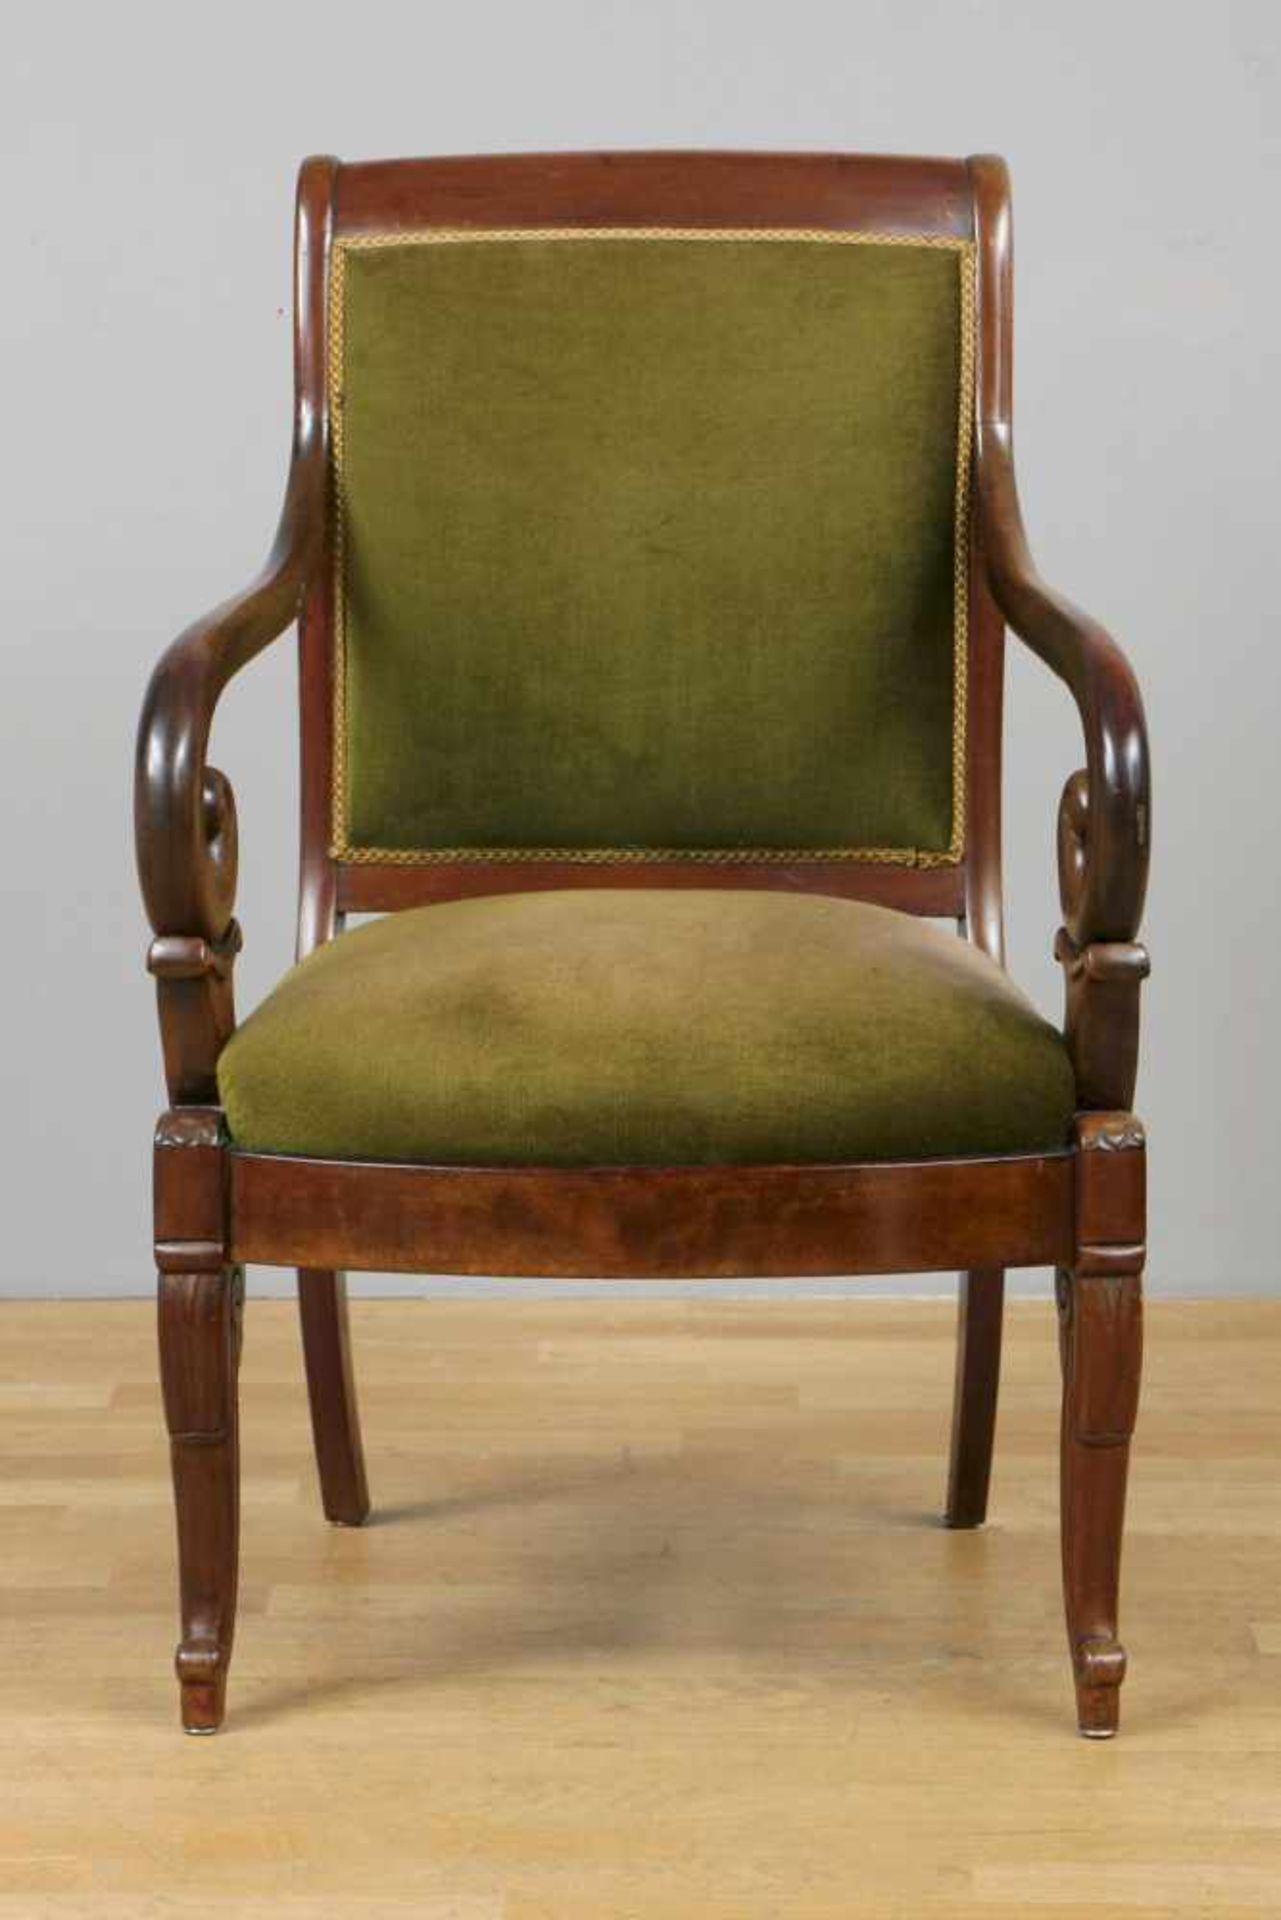 Biedermeier ArmlehnstuhlRahmen Mahagoni, wohl Dänemark, um 1840, gepolsterte Sitz- und